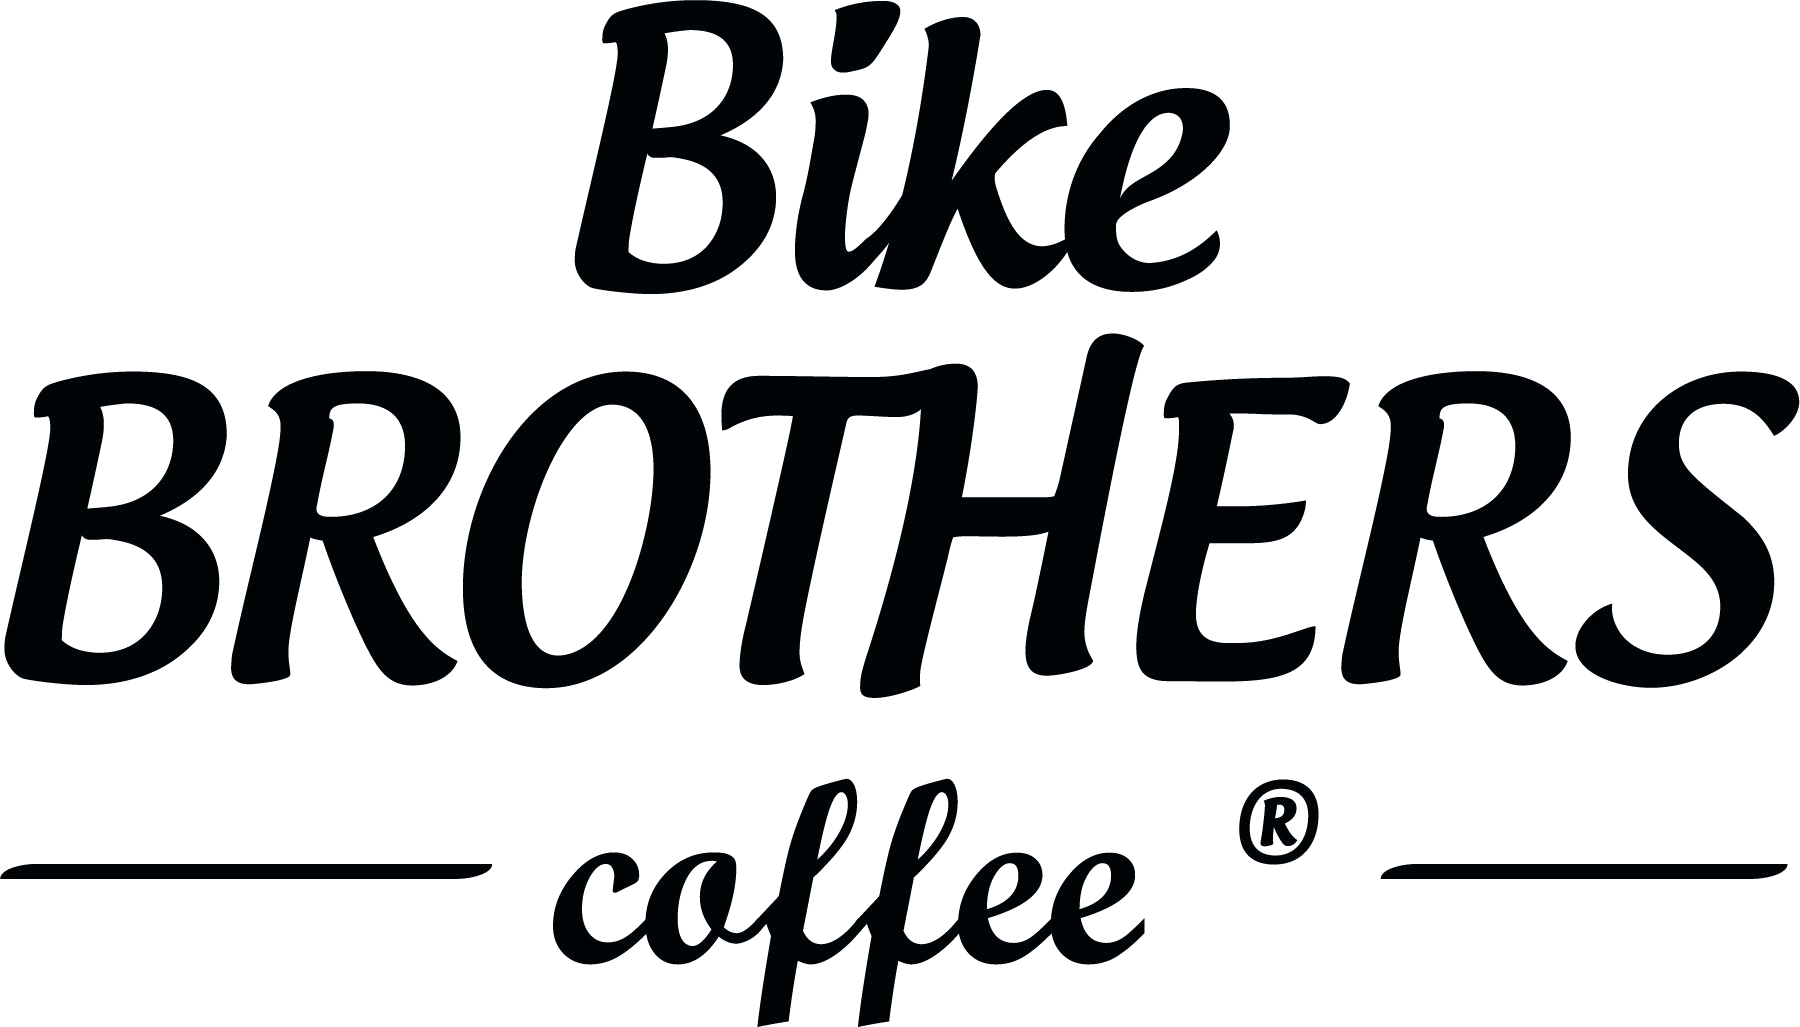 Bikebrothers Coffee